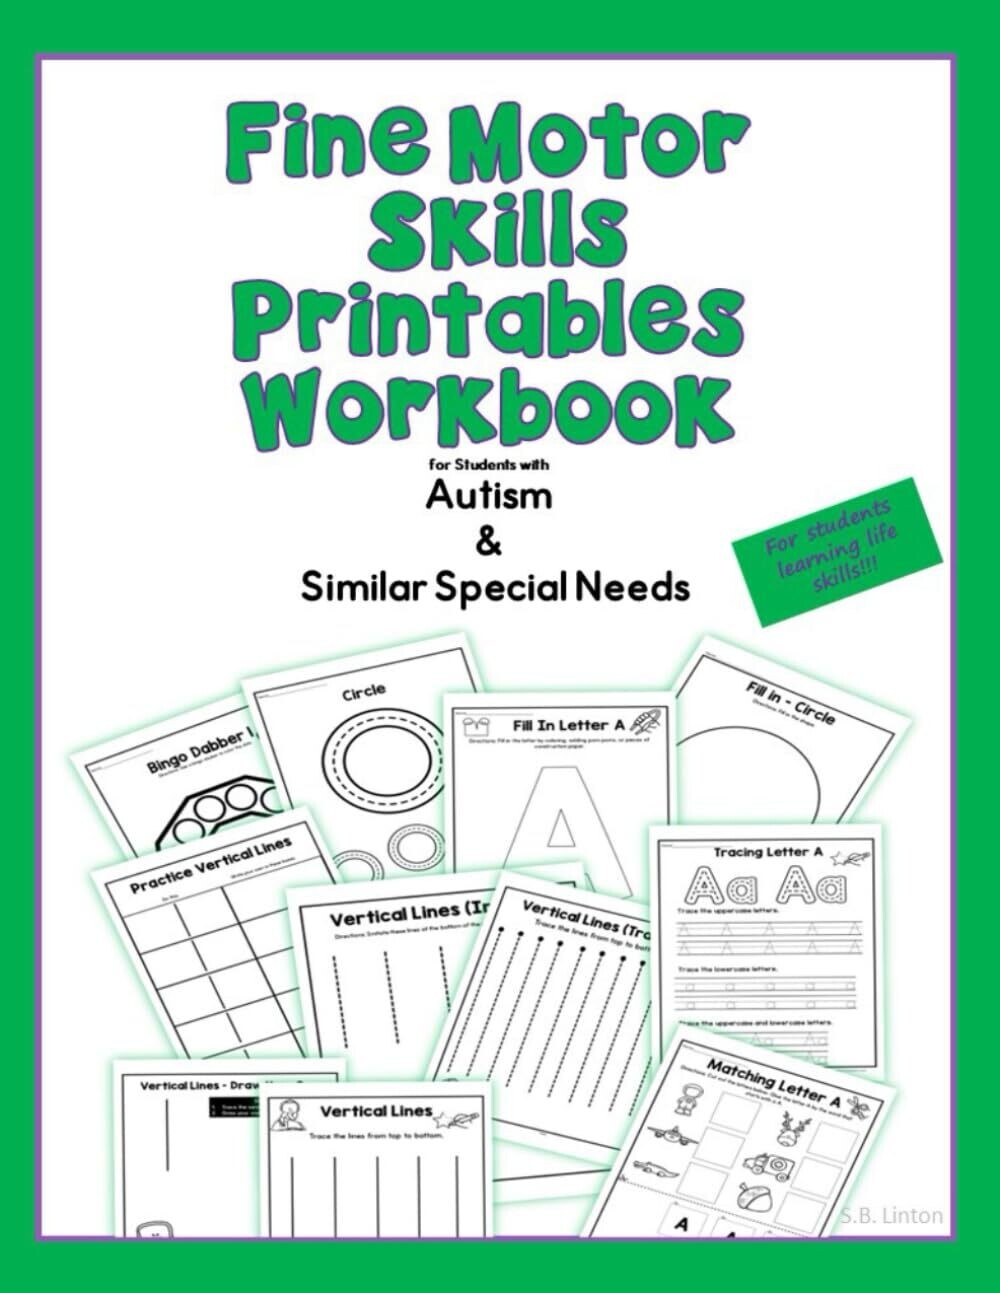 fine motor skills printable workbook cover